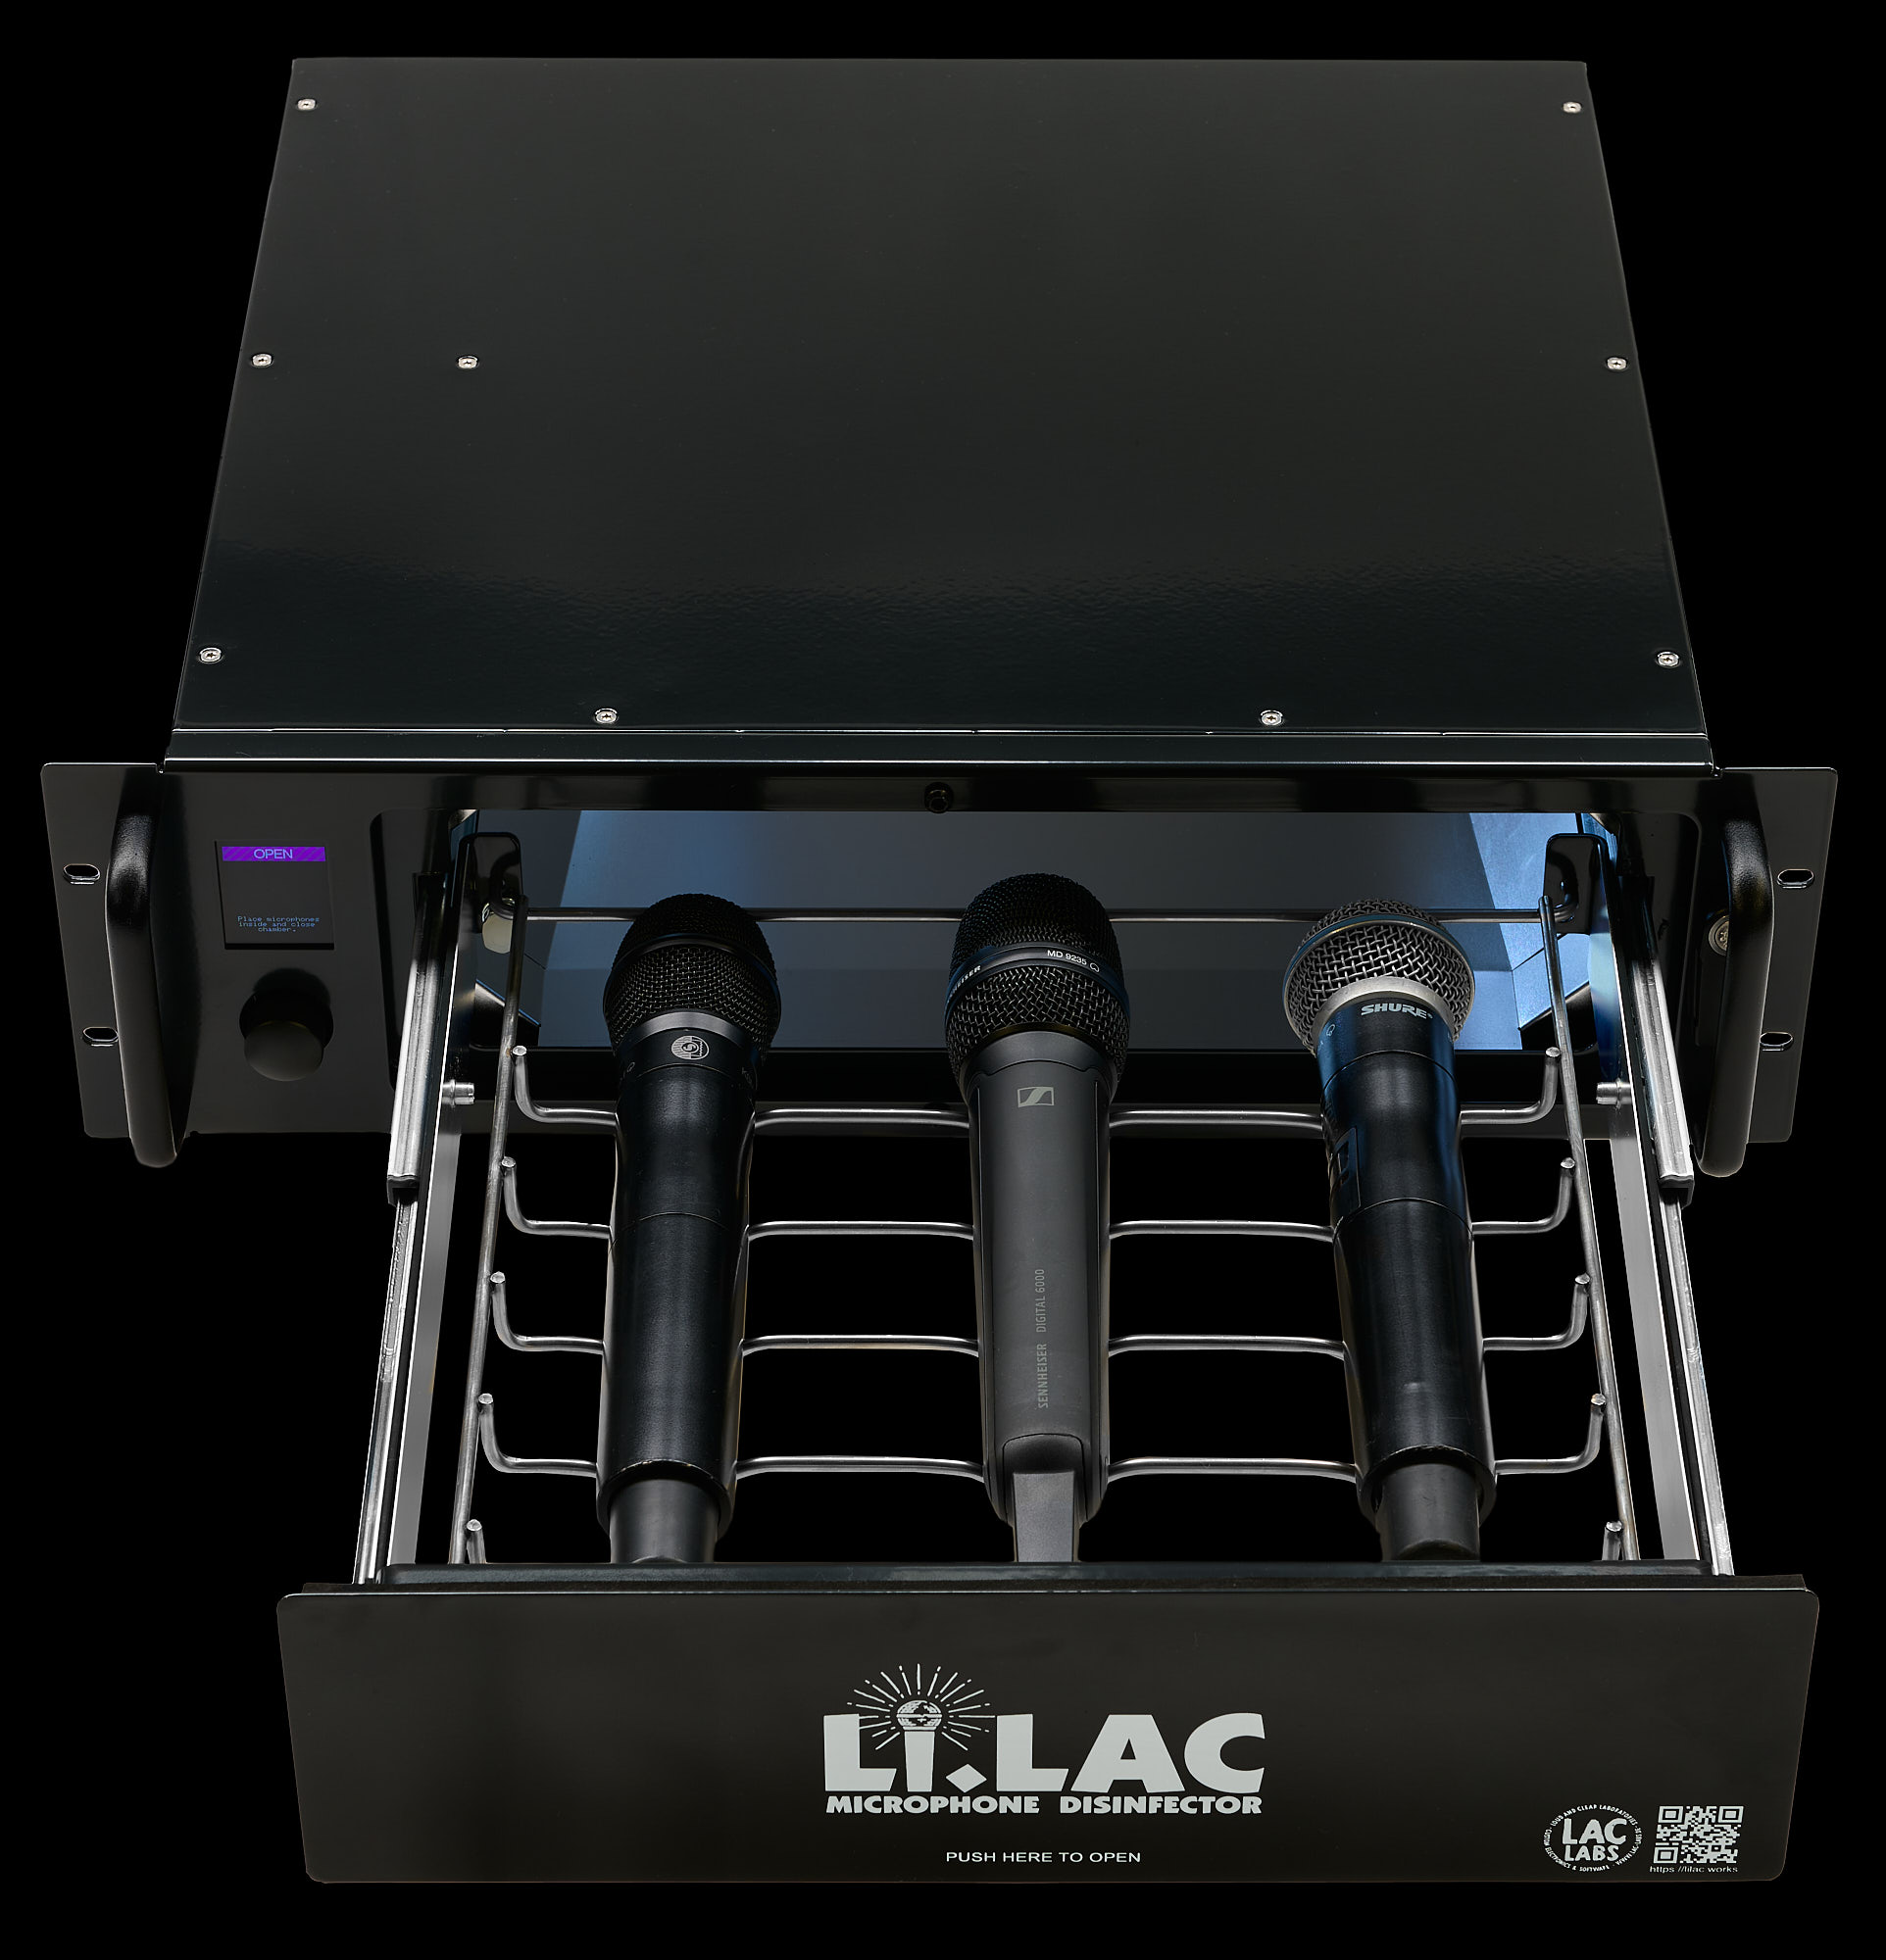 Li.LAC microphone disinfector LiLAC